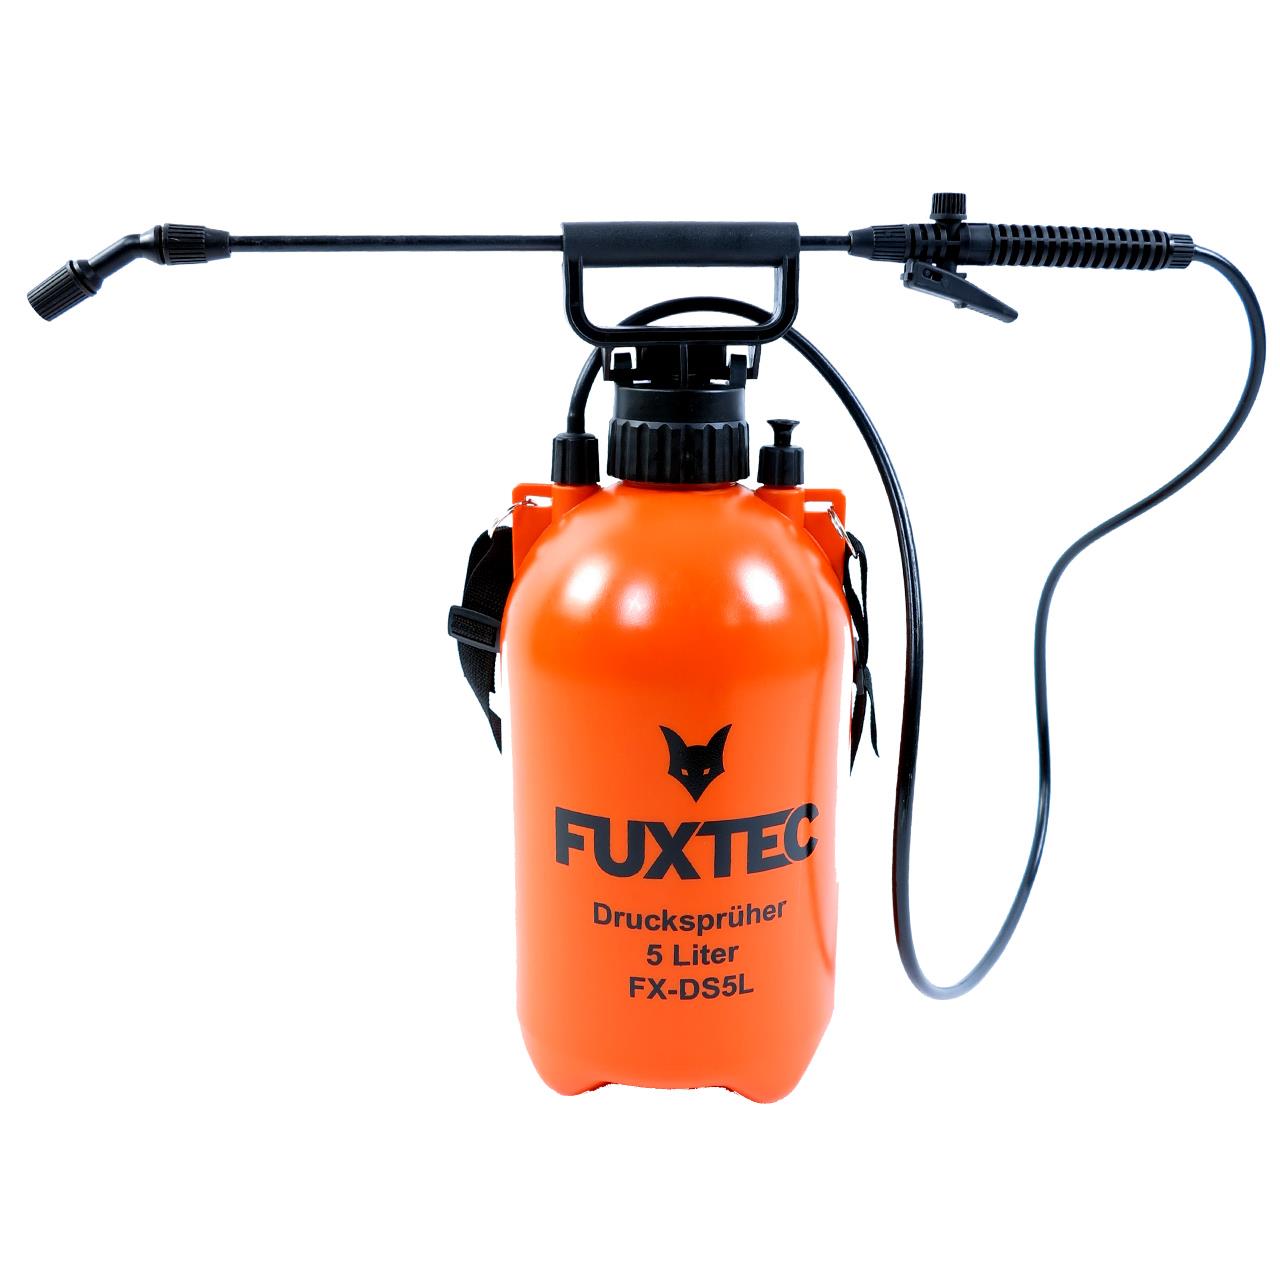 FUXTEC Drucksprüher 5 Liter FX-DS5L